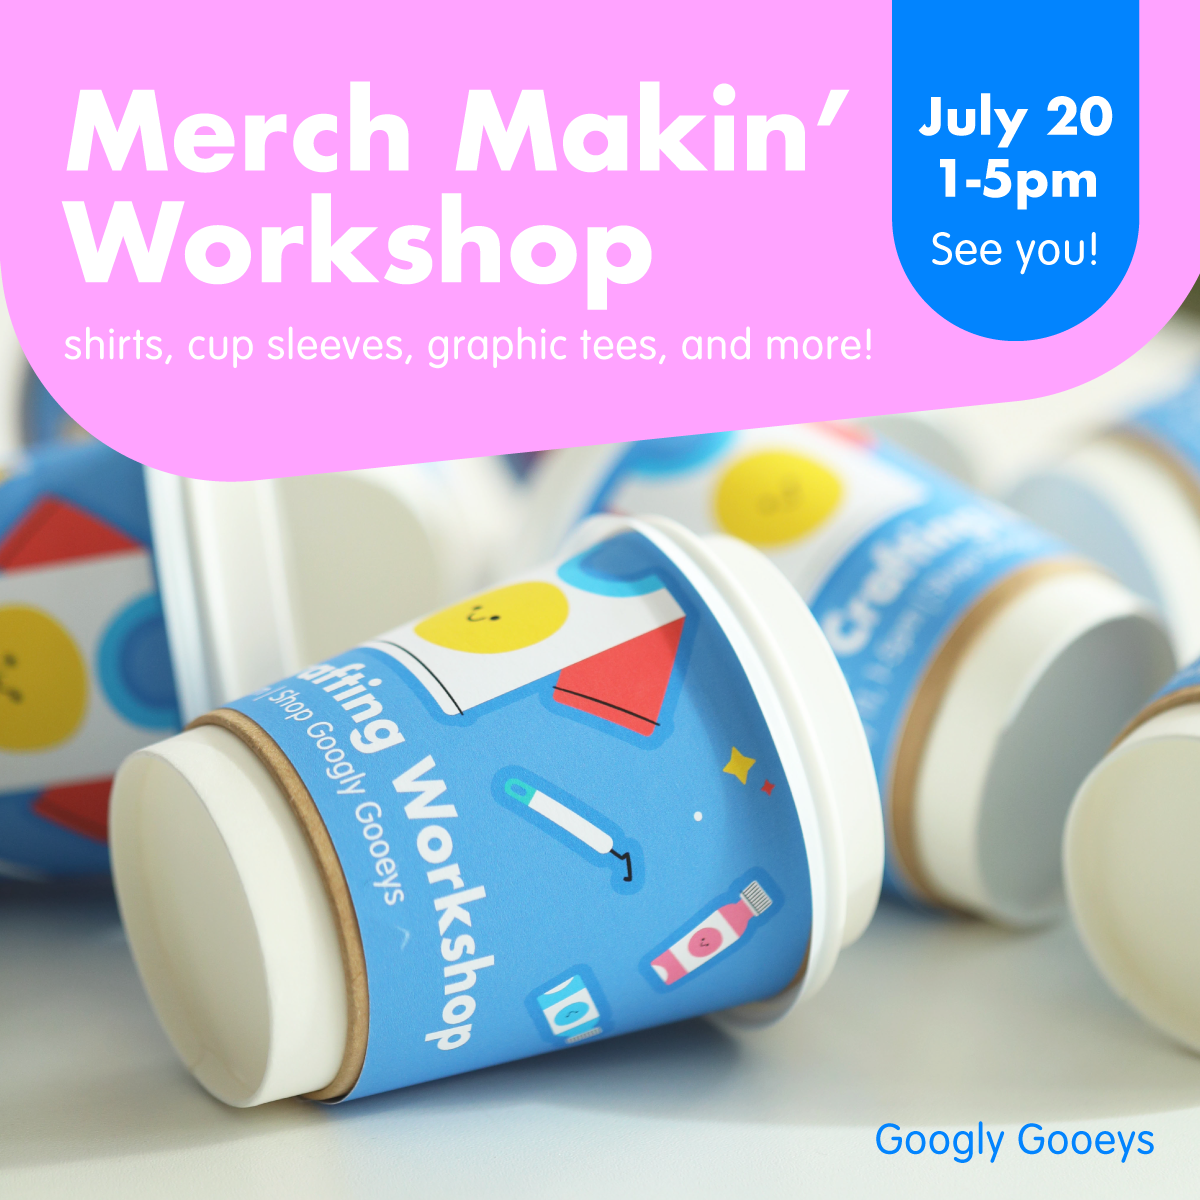 Merch Makin' Workshop (July 20)